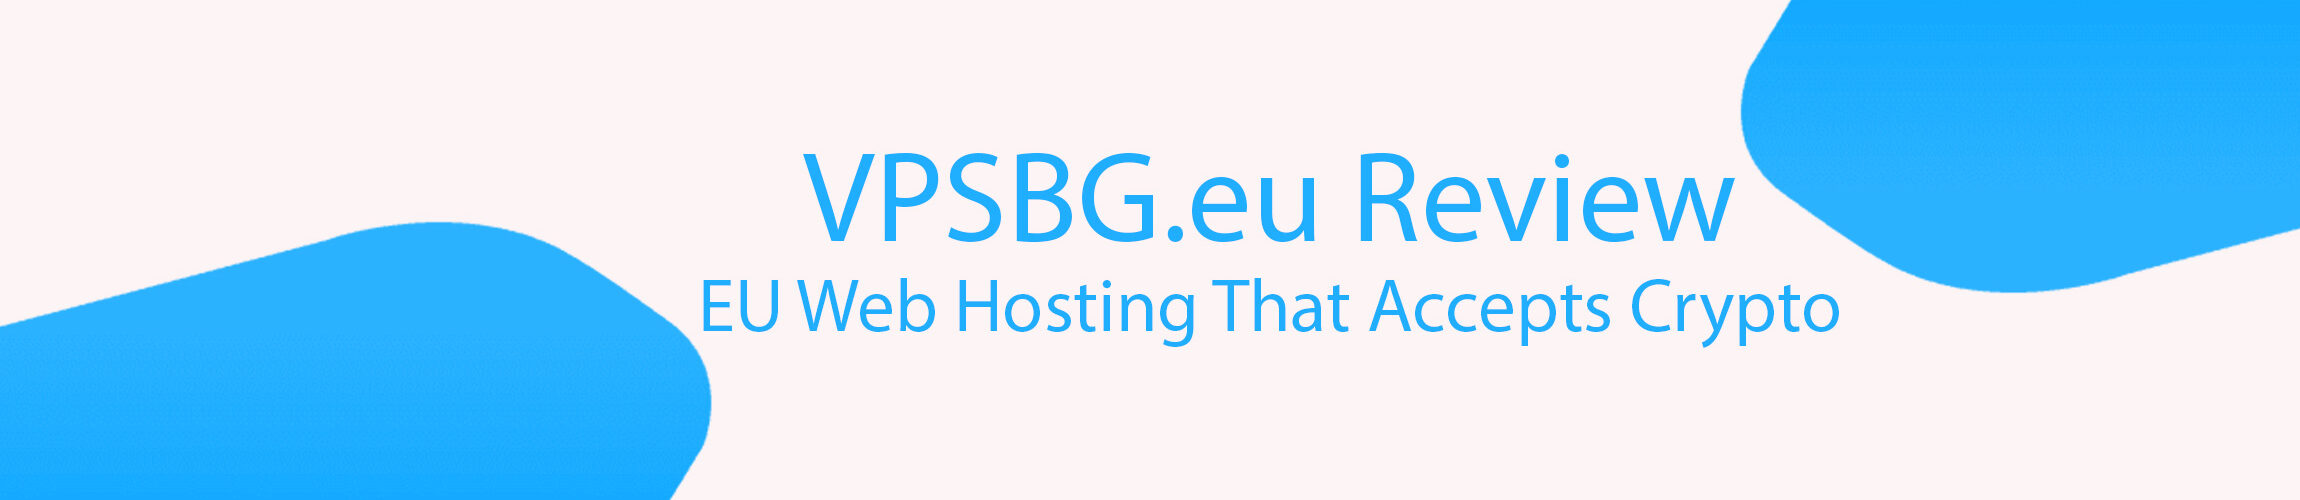 VPSBG.eu review